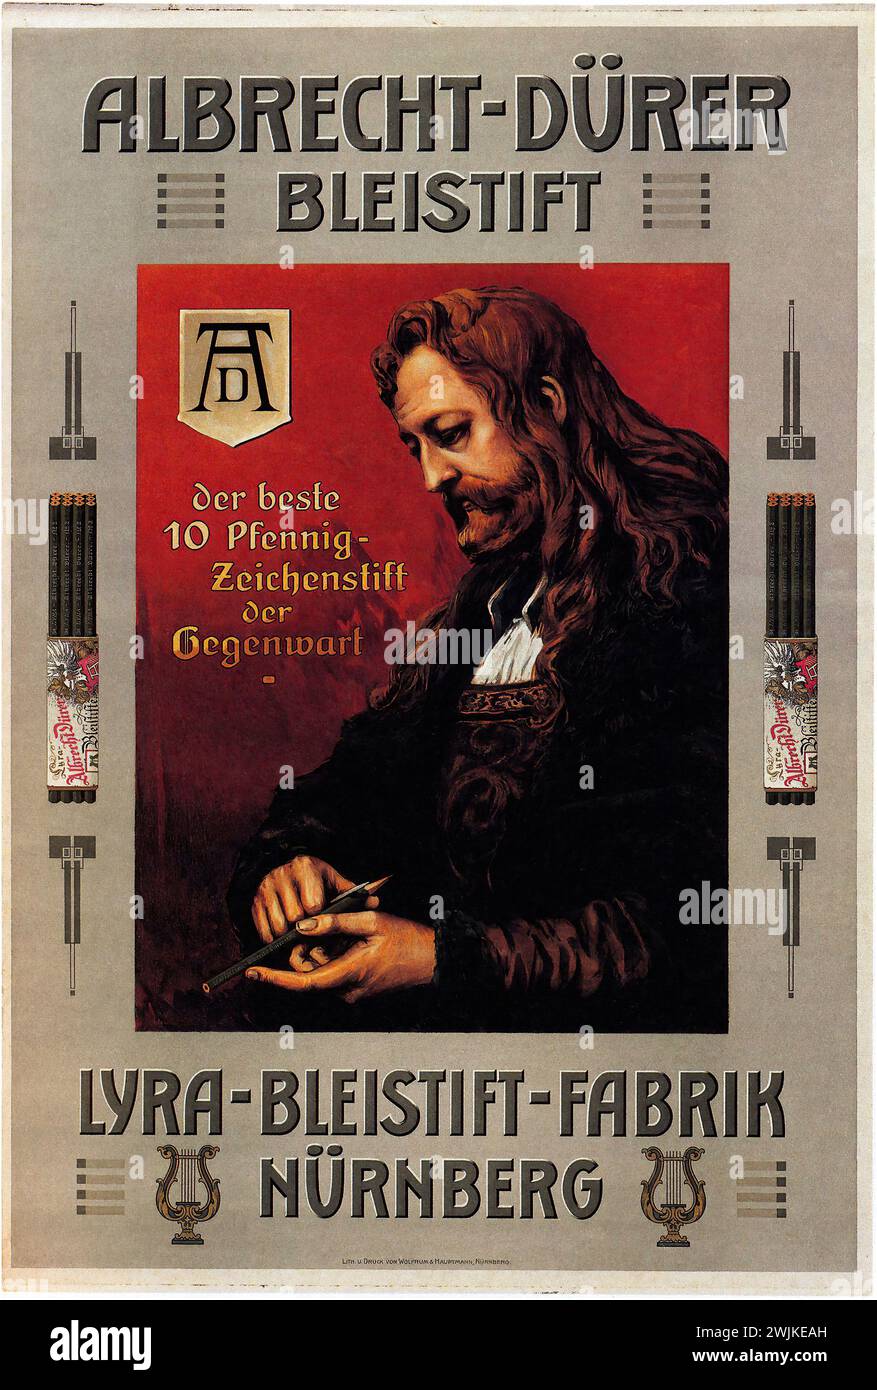 'Albrecht-Dürer Bleistift Der beste 10 Pfennig-Zeichenstift der Gegenwart LYRA-BLEISTIFT-FABRIK NÜRNBERG' ['Albrecht Dürer Pencil The best 10 Pfennig drawing pencil of the present LYRA PENCIL FACTORY NUREMBERG'] Vintage German Advertising, 1907. The poster features Albrecht Dürer, with pencils and stylized text. The graphic style is realistic with a focus on the artist's renowned image. Stock Photo